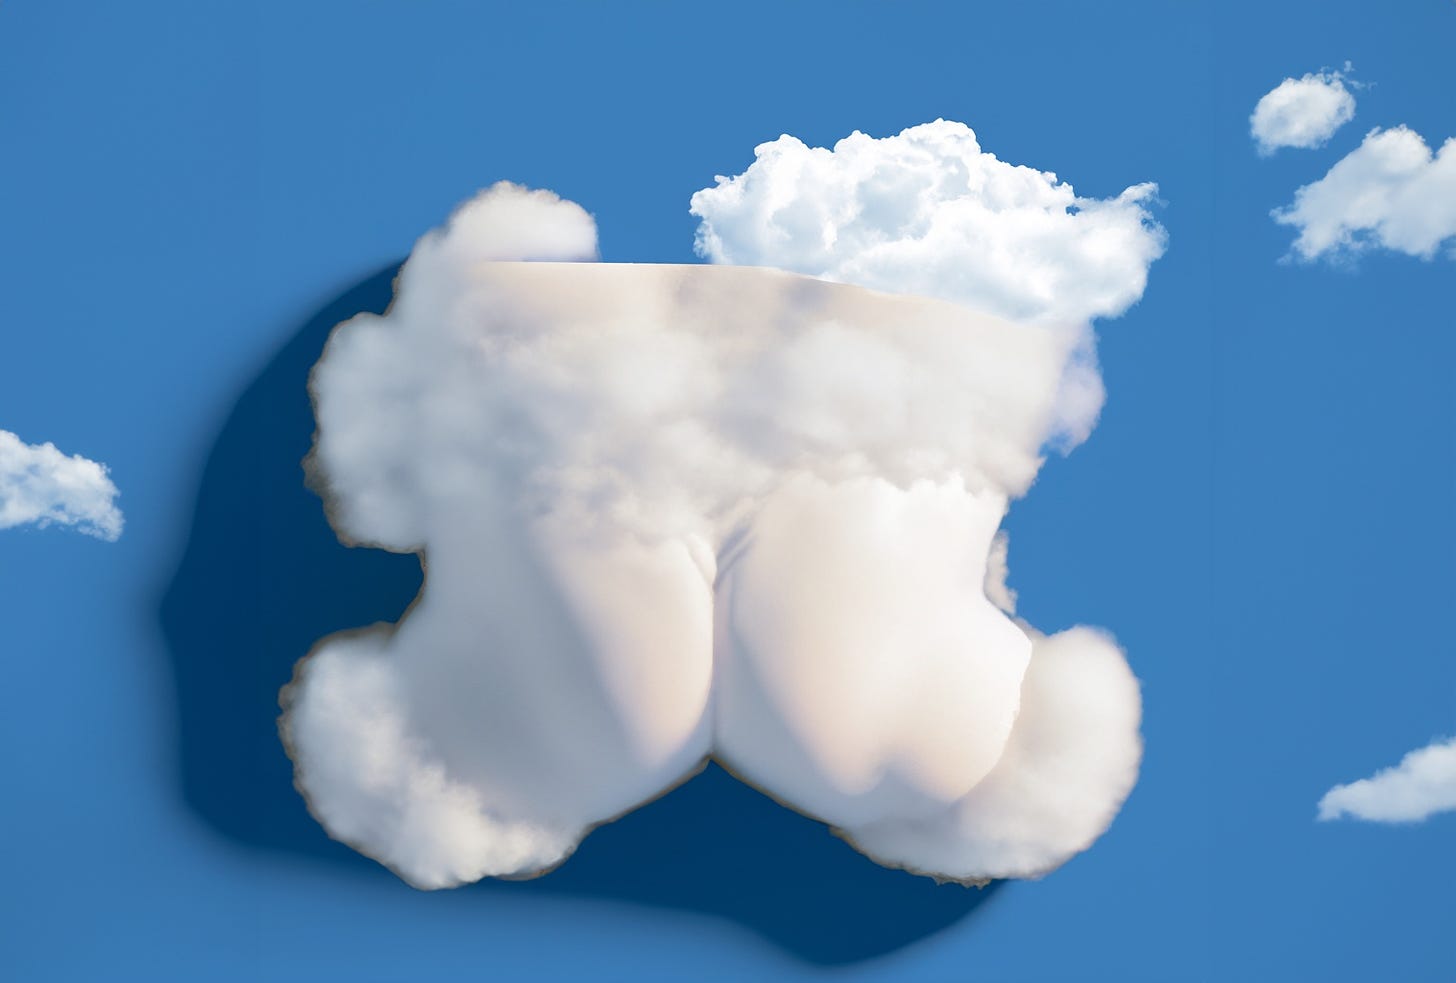 a cloud in the shape of a muscular ass, on a big blue sky